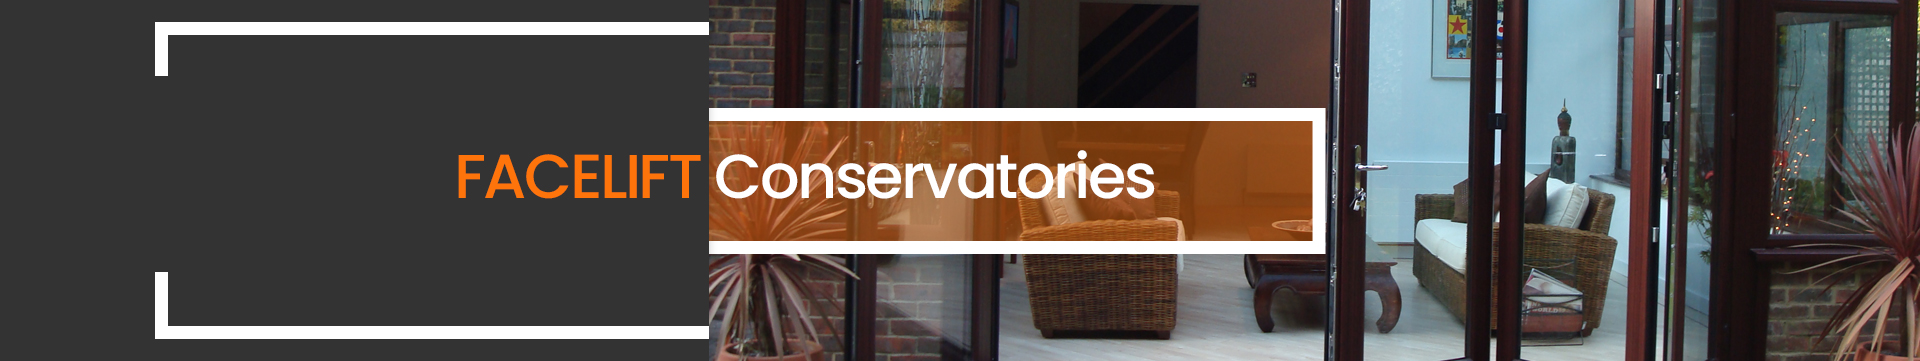 conservatories top banner Facelift